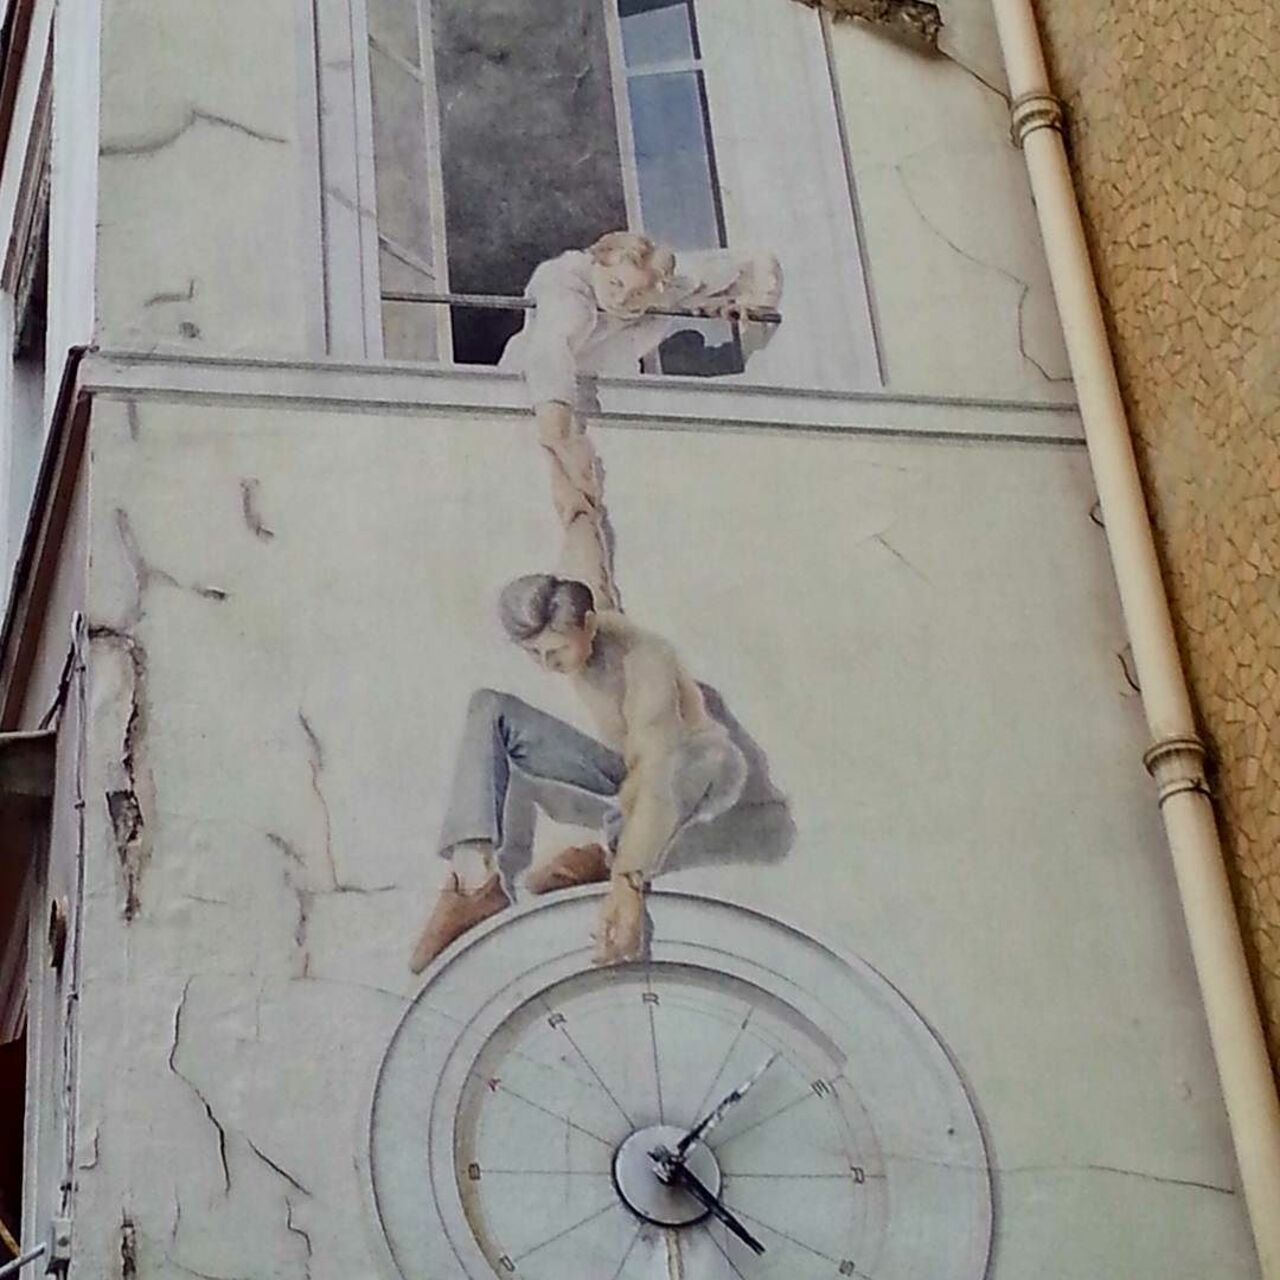 #Paris #graffiti photo by @fotoflaneuse http://ift.tt/1ksjQ5s #StreetArt https://t.co/f6BYpSBKNo